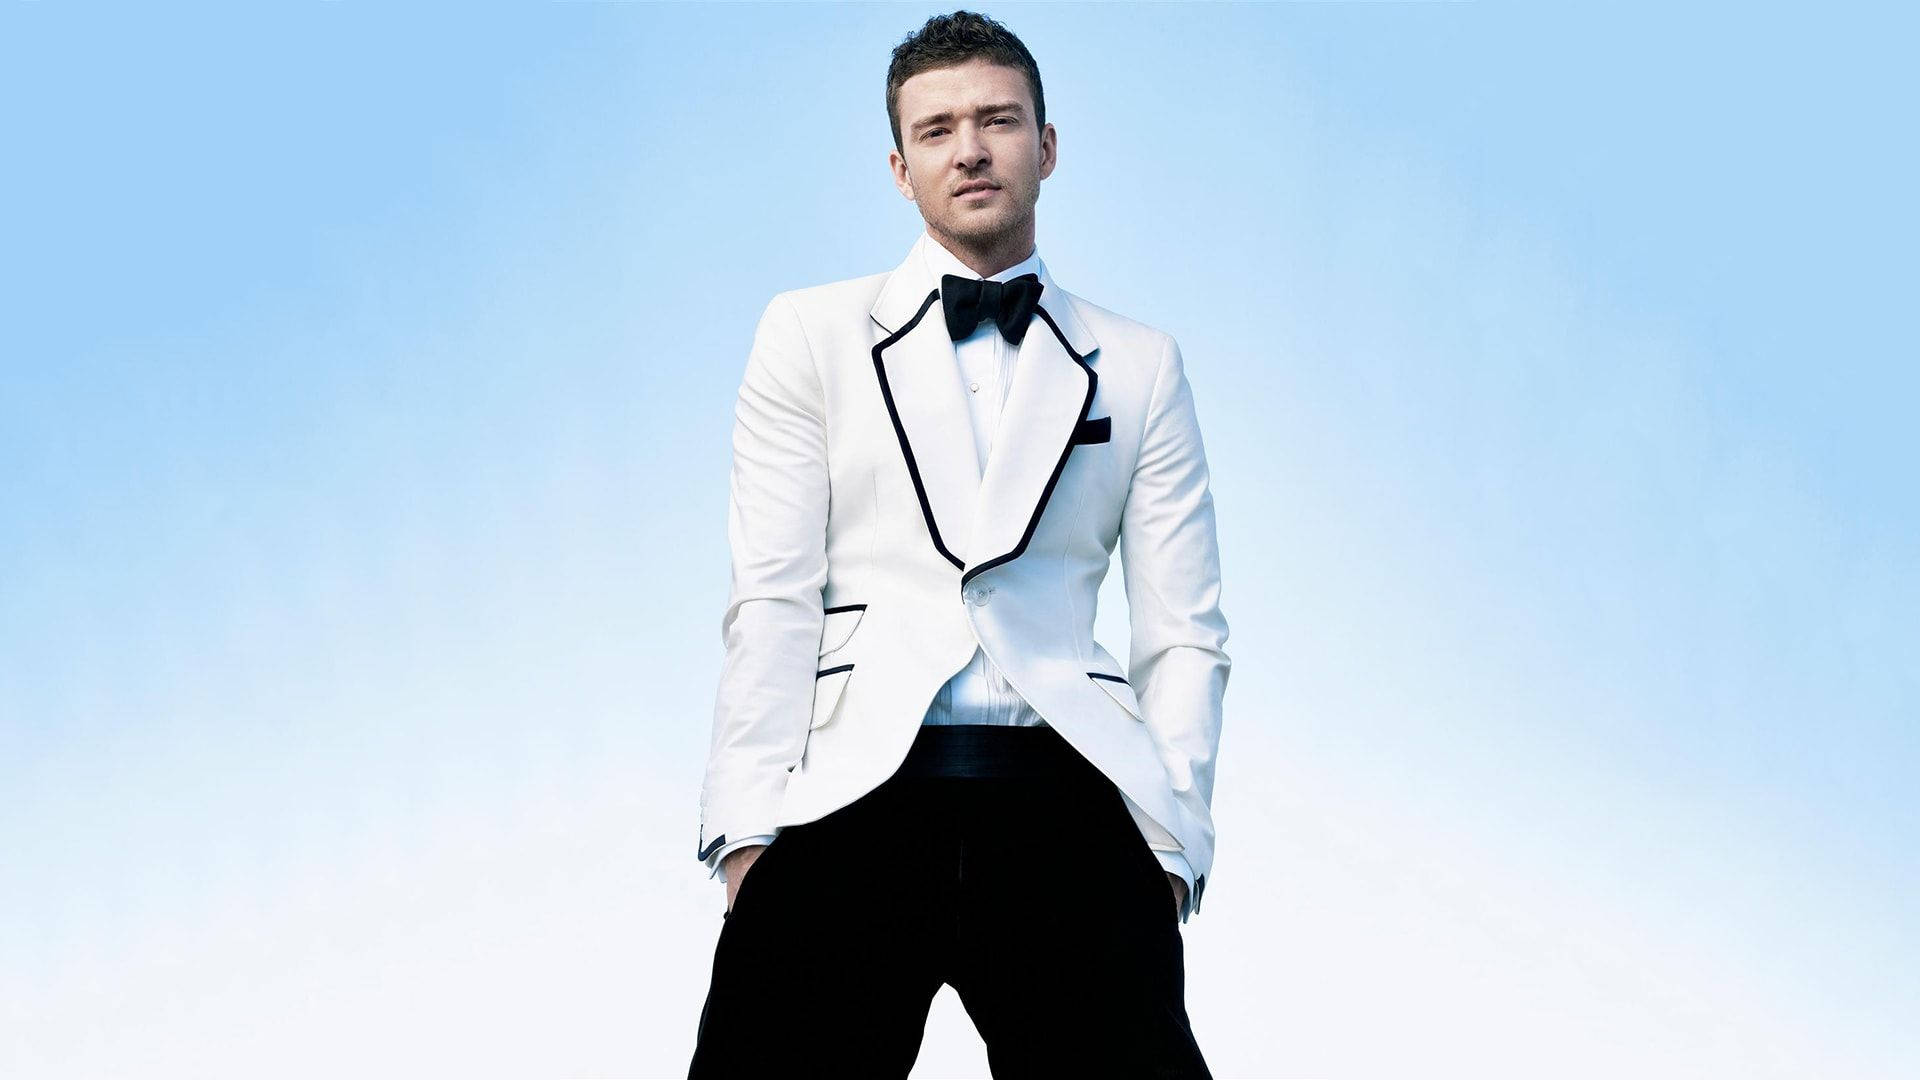 Timberlake technologies. Джастин Тимберлейк 2022. Джастин Тимберлейк в костюме. Suit&Tie костюм Джастина Тимберлейка. Джастин Тимберлейк HD.